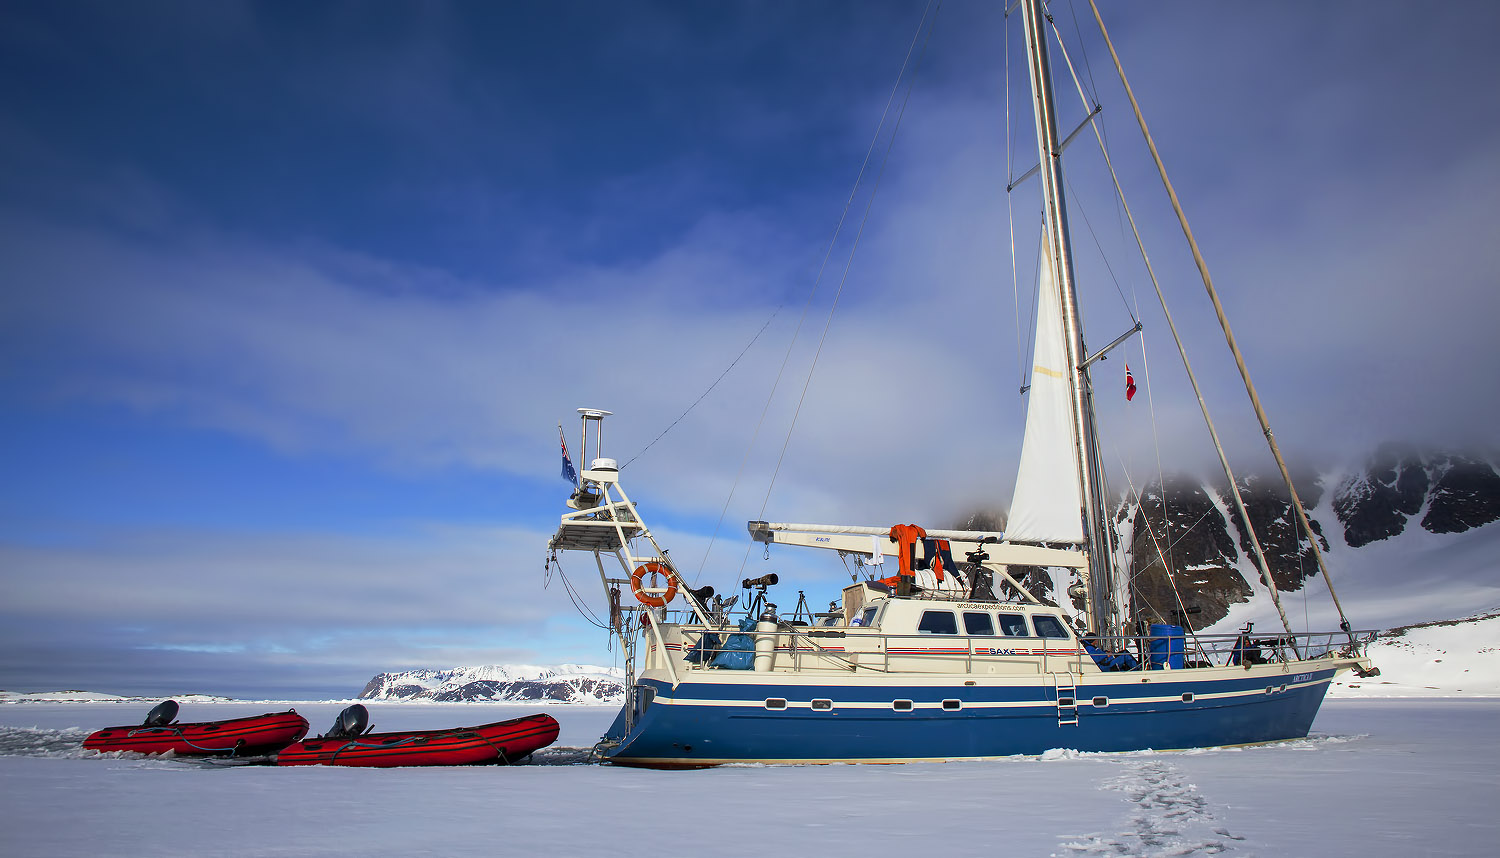 Our sail yacht Arctica II